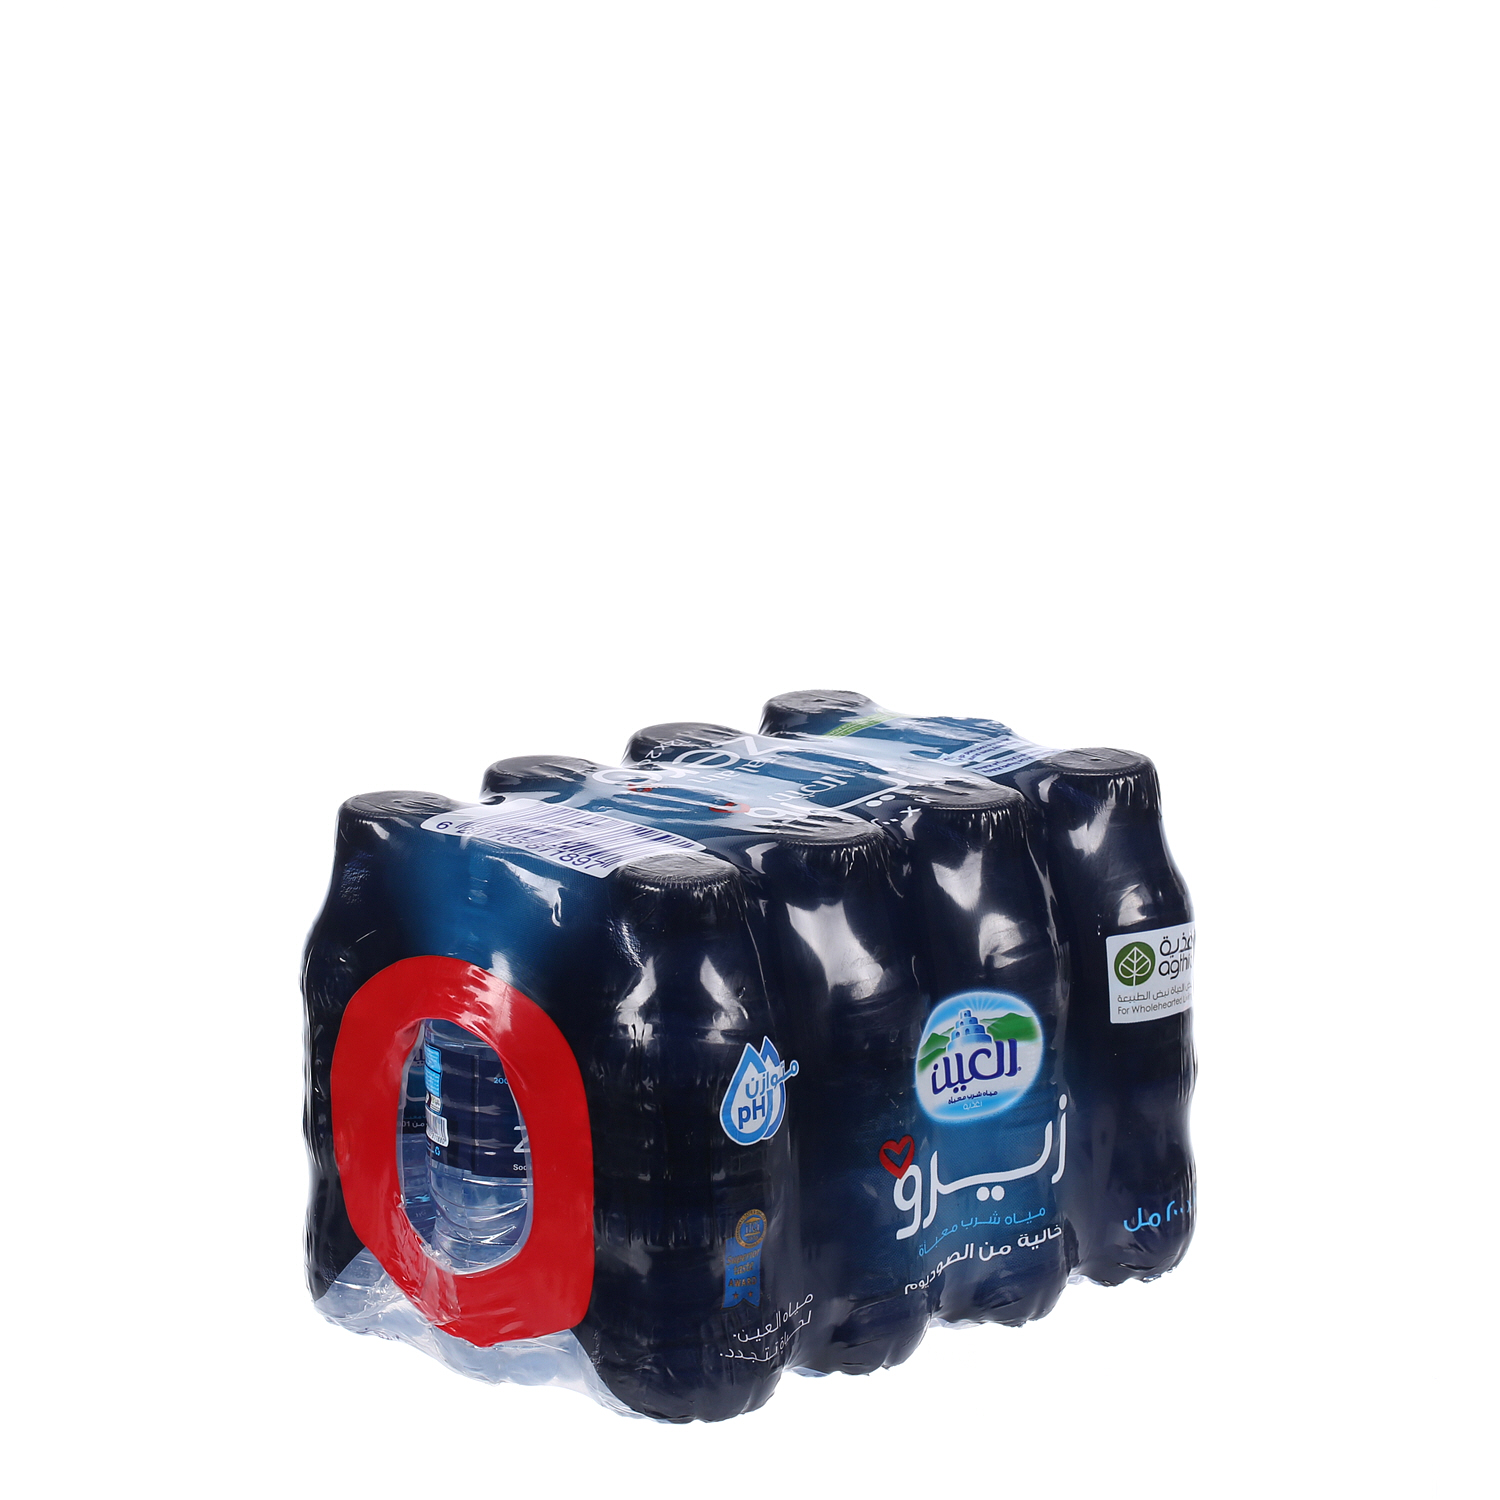 Al Ain Water Zero 200 ml × 12 Pack